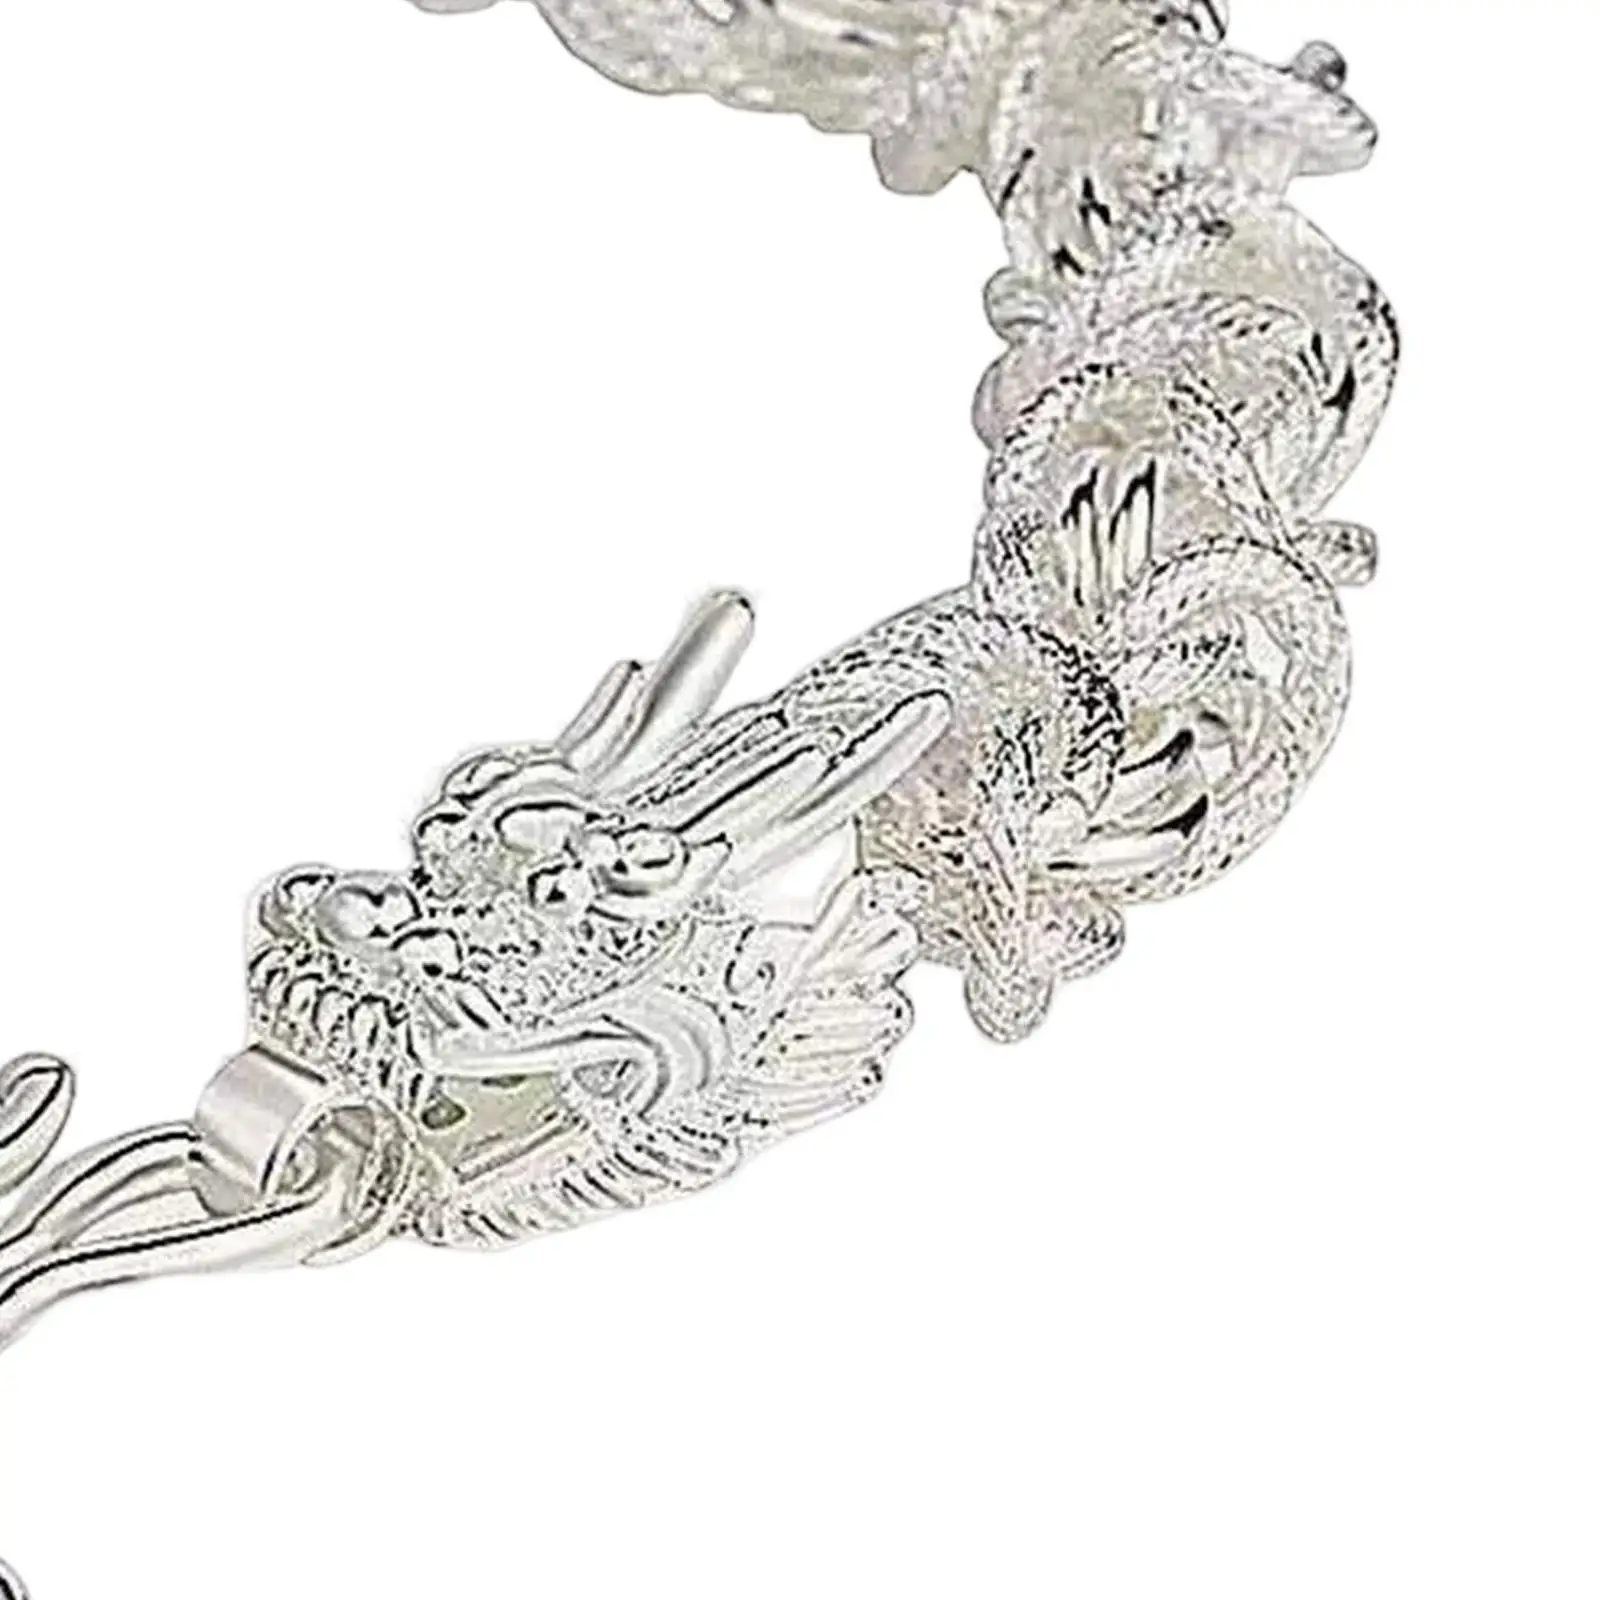 Mens Dragon Link Chain Bracelet Jewelry Heavy Bracelet Bangle Gothic Novelty